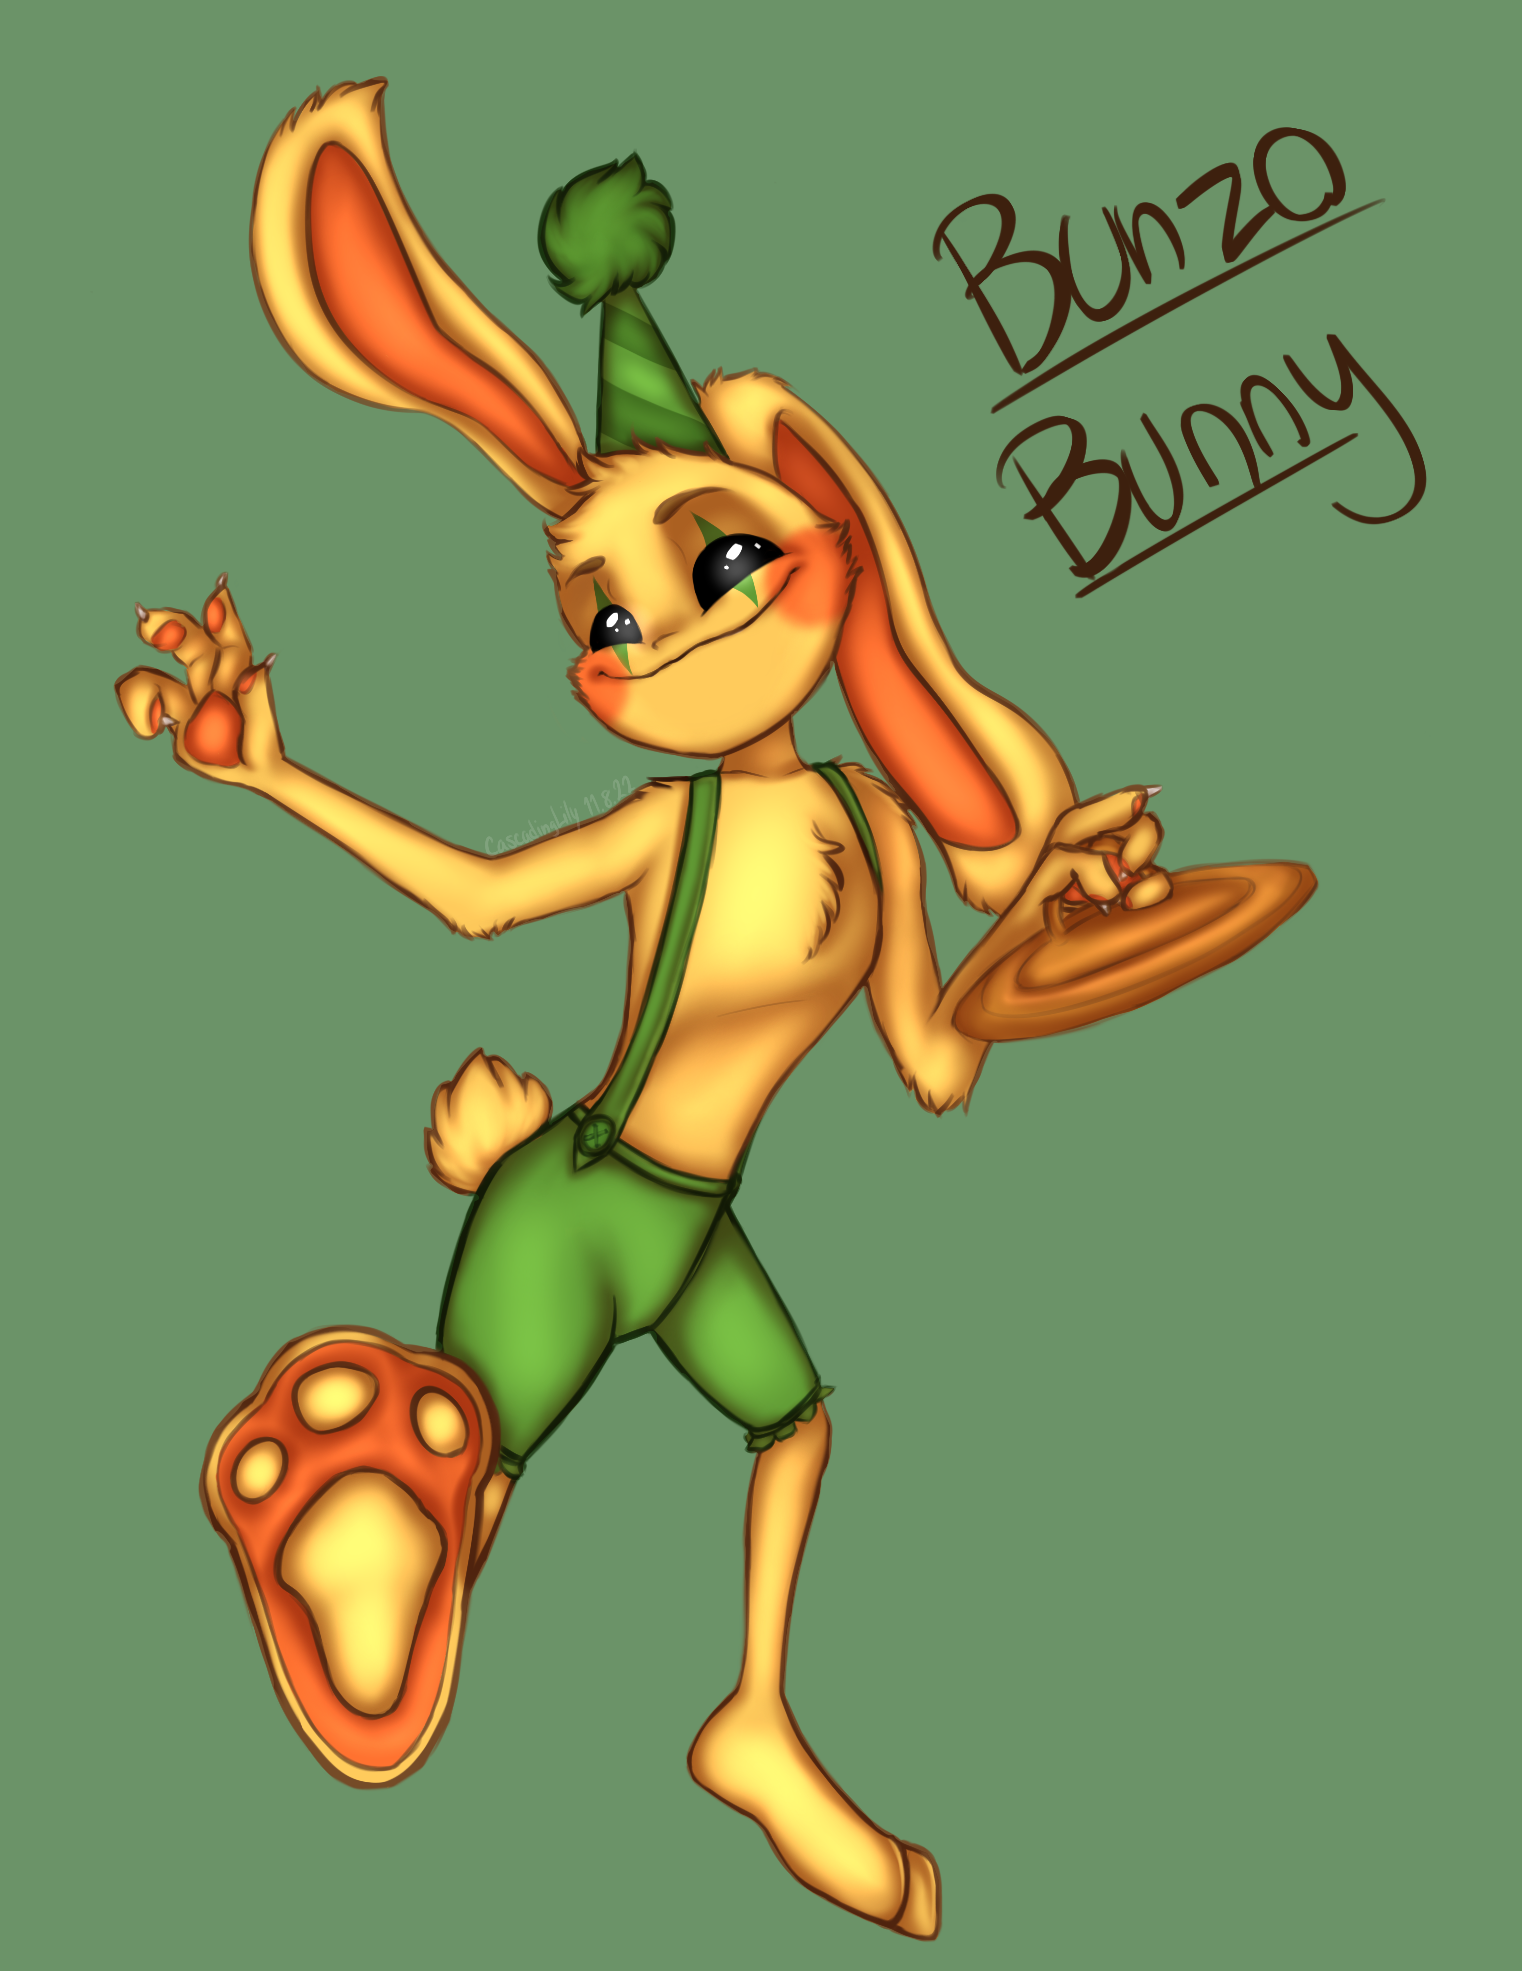 Alternative universe of Bunzo Bunny's comic. : r/PoppyPlaytime